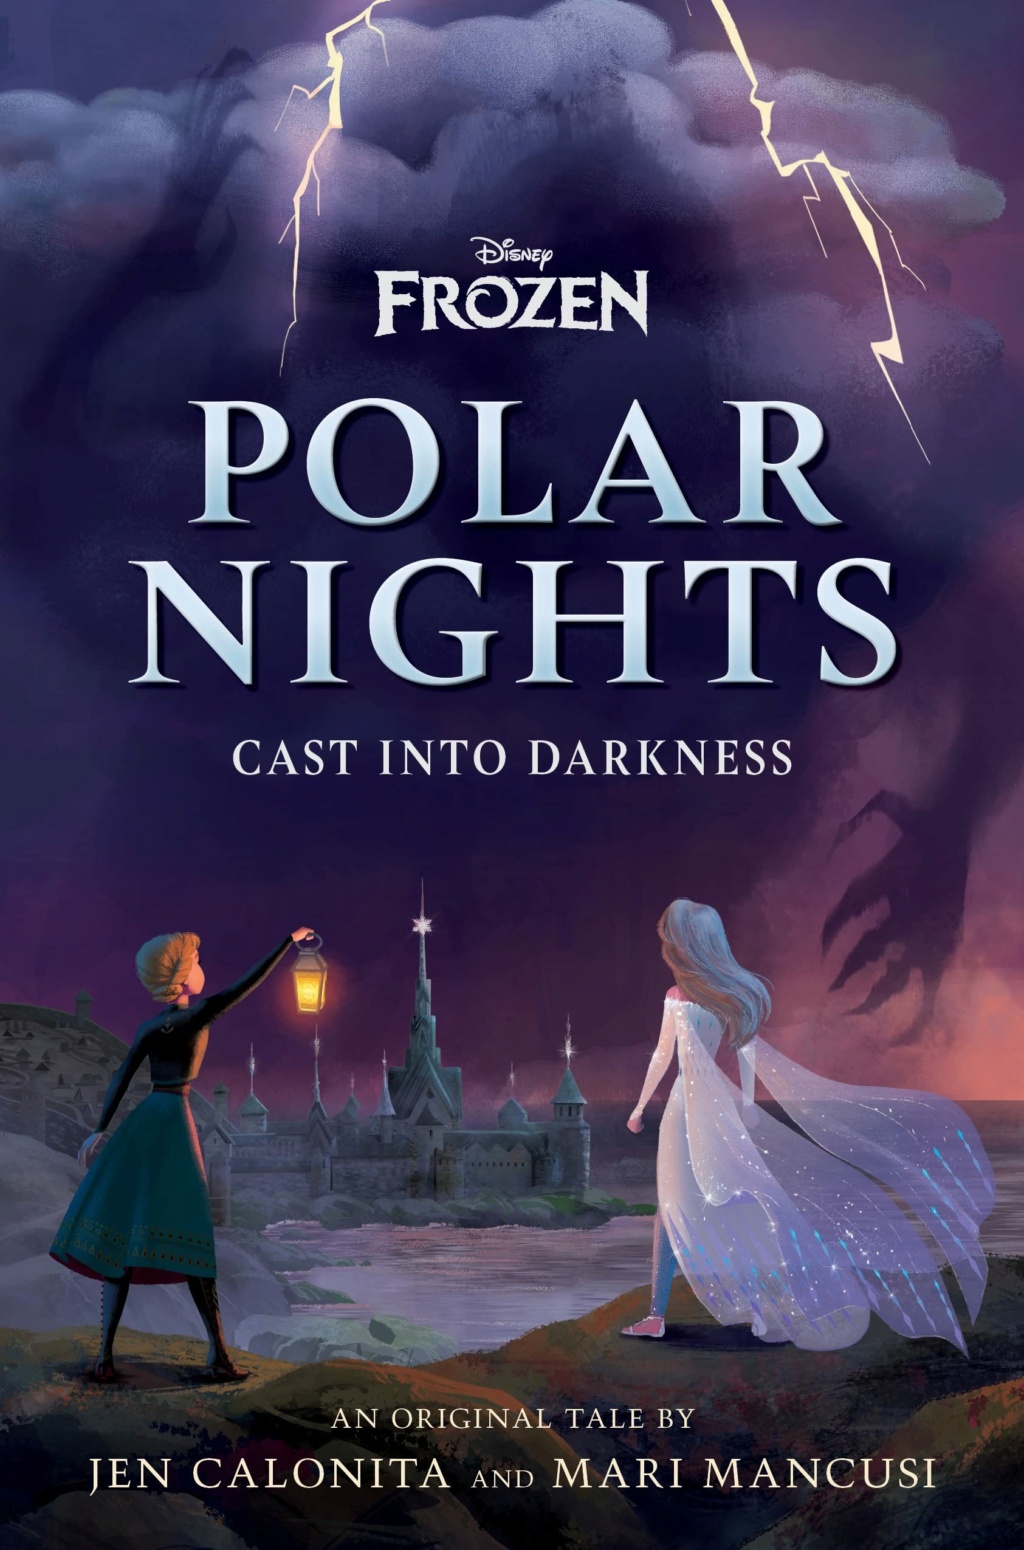 POLAR NIGHTS : Cast into darkness (printemps 2022) TRADUIT PAR ANSA - Page 3 81peny10